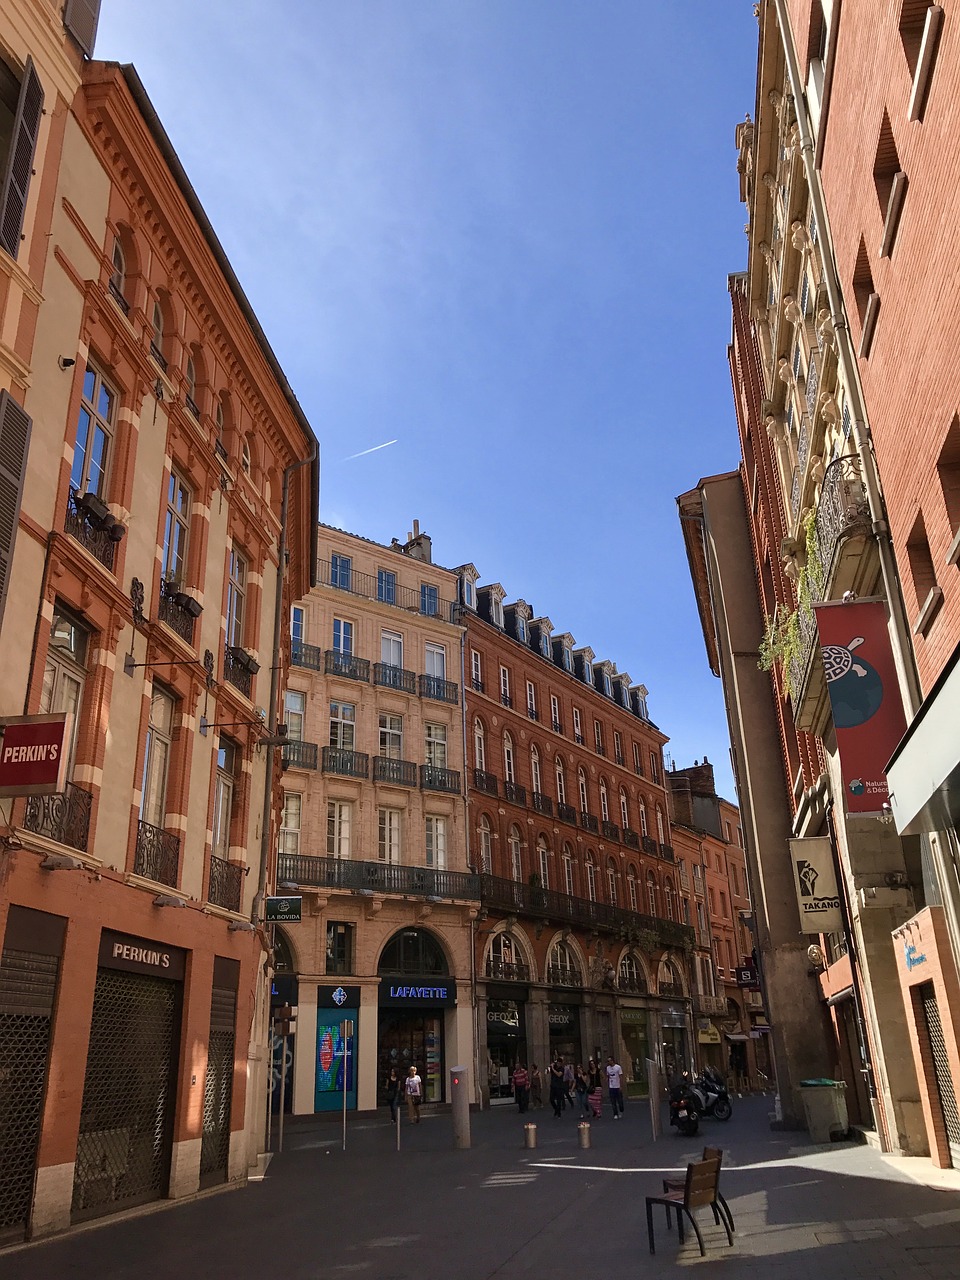 Toulouse, France, Prancūzų Kalba, Architektūra, Europietis, Pastatas, Orientyras, Plyta, Miestas, Senas